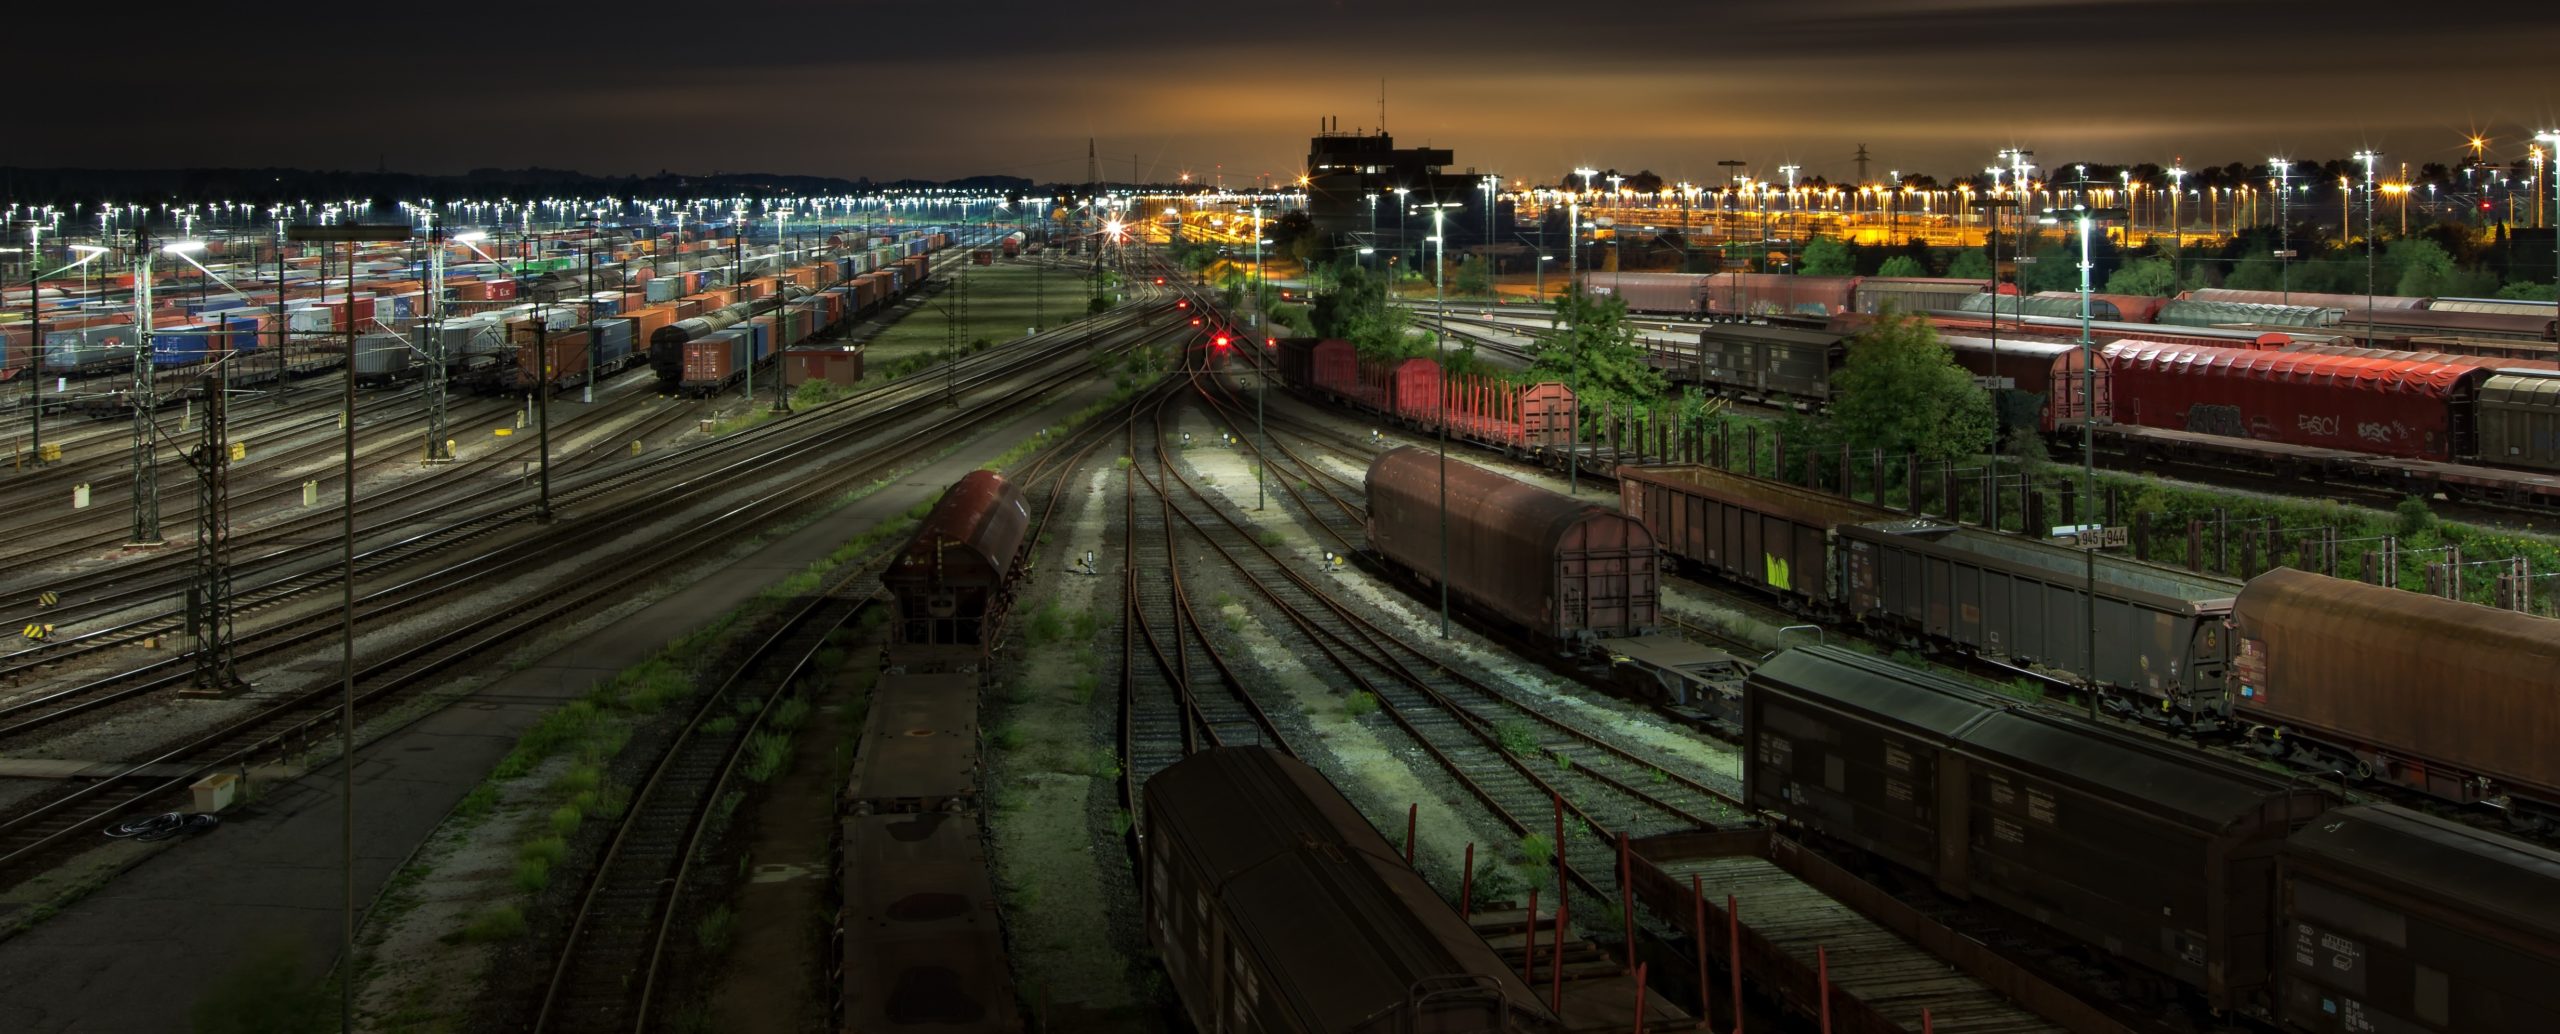 LiDAR and digitalising freight train operations